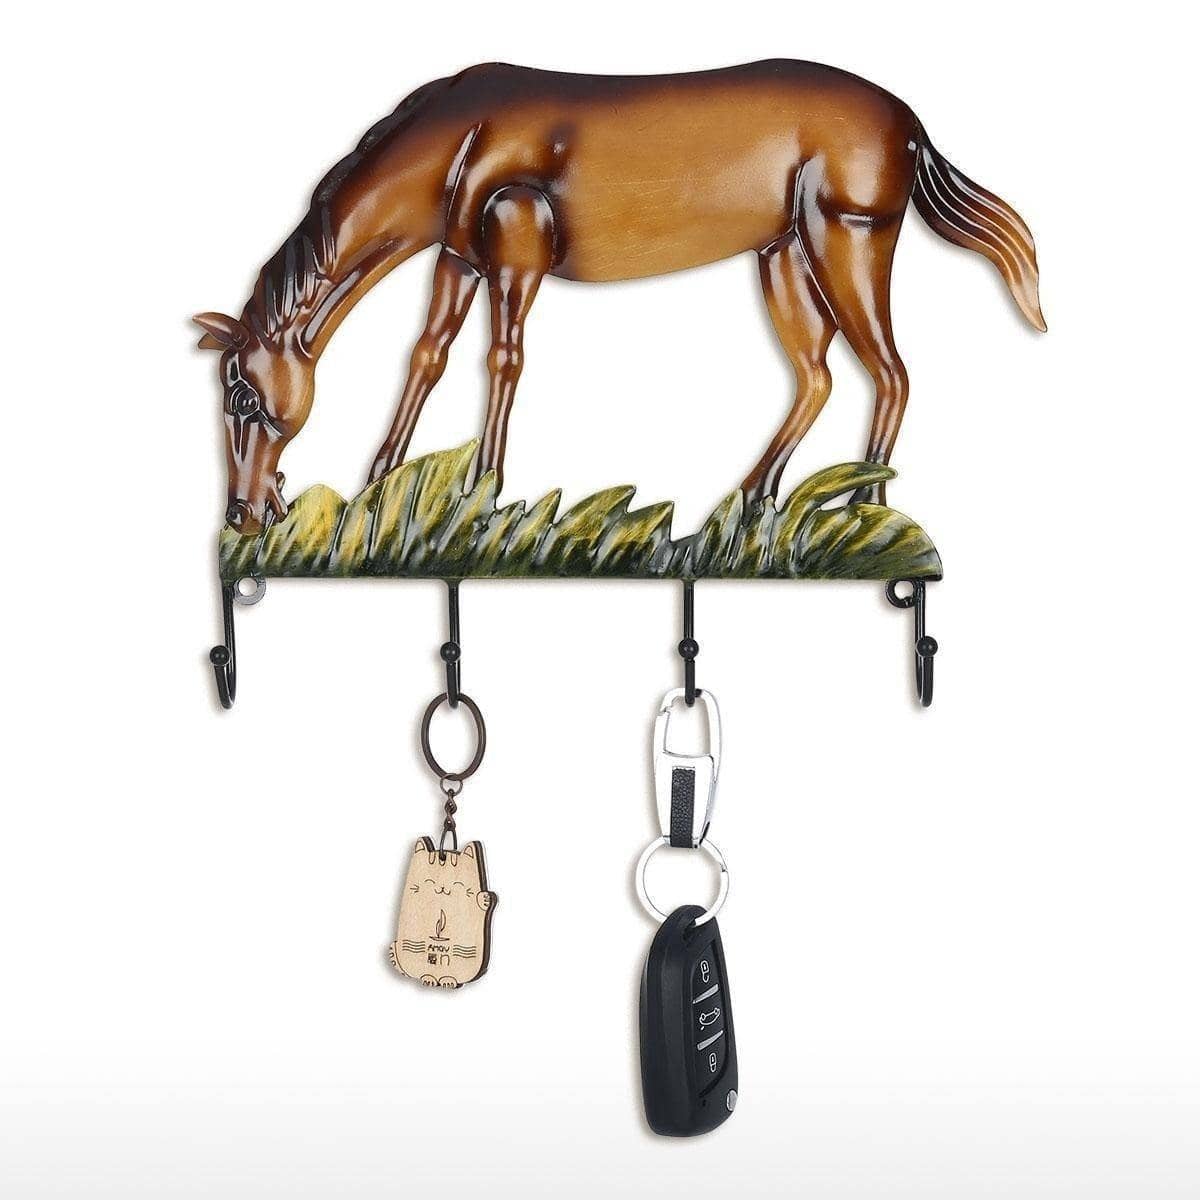 Animal Key Hook Wall Hanger - Adorable and Practical Home Decor